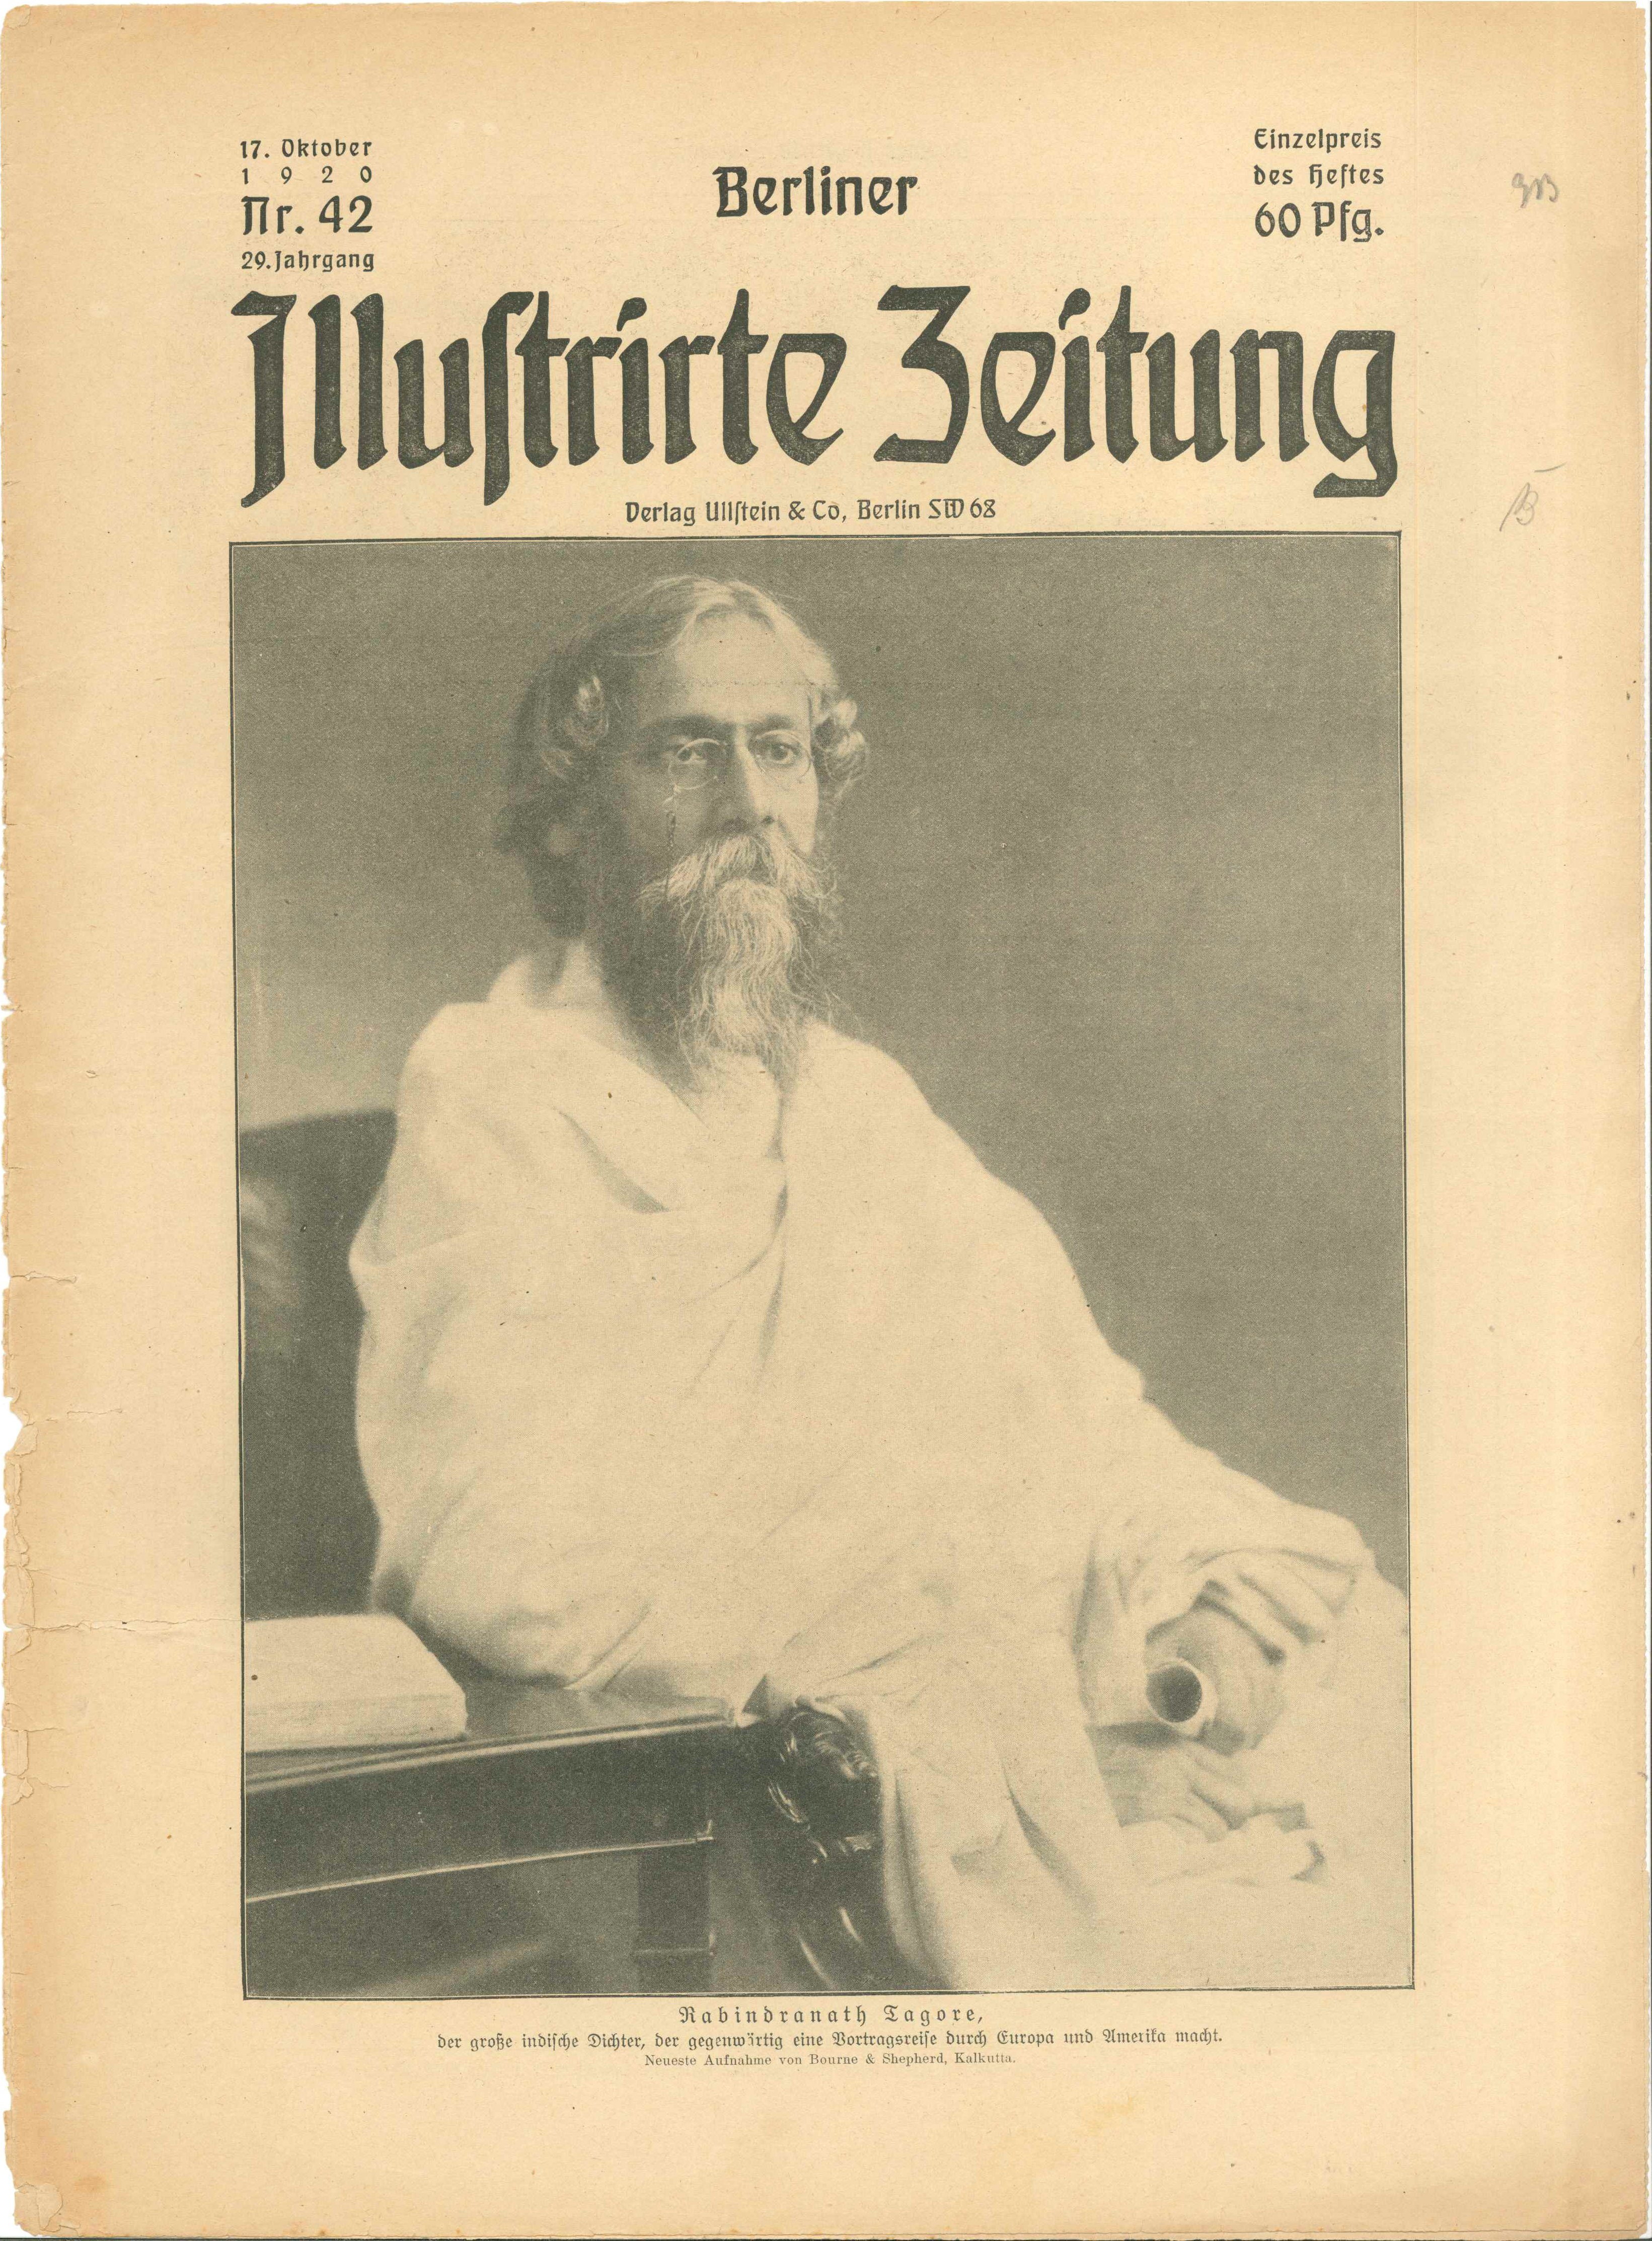 BIZ, Nr. 42, 1920, Titelseite (Kurt Tucholsky Literaturmuseum CC BY-NC-SA)